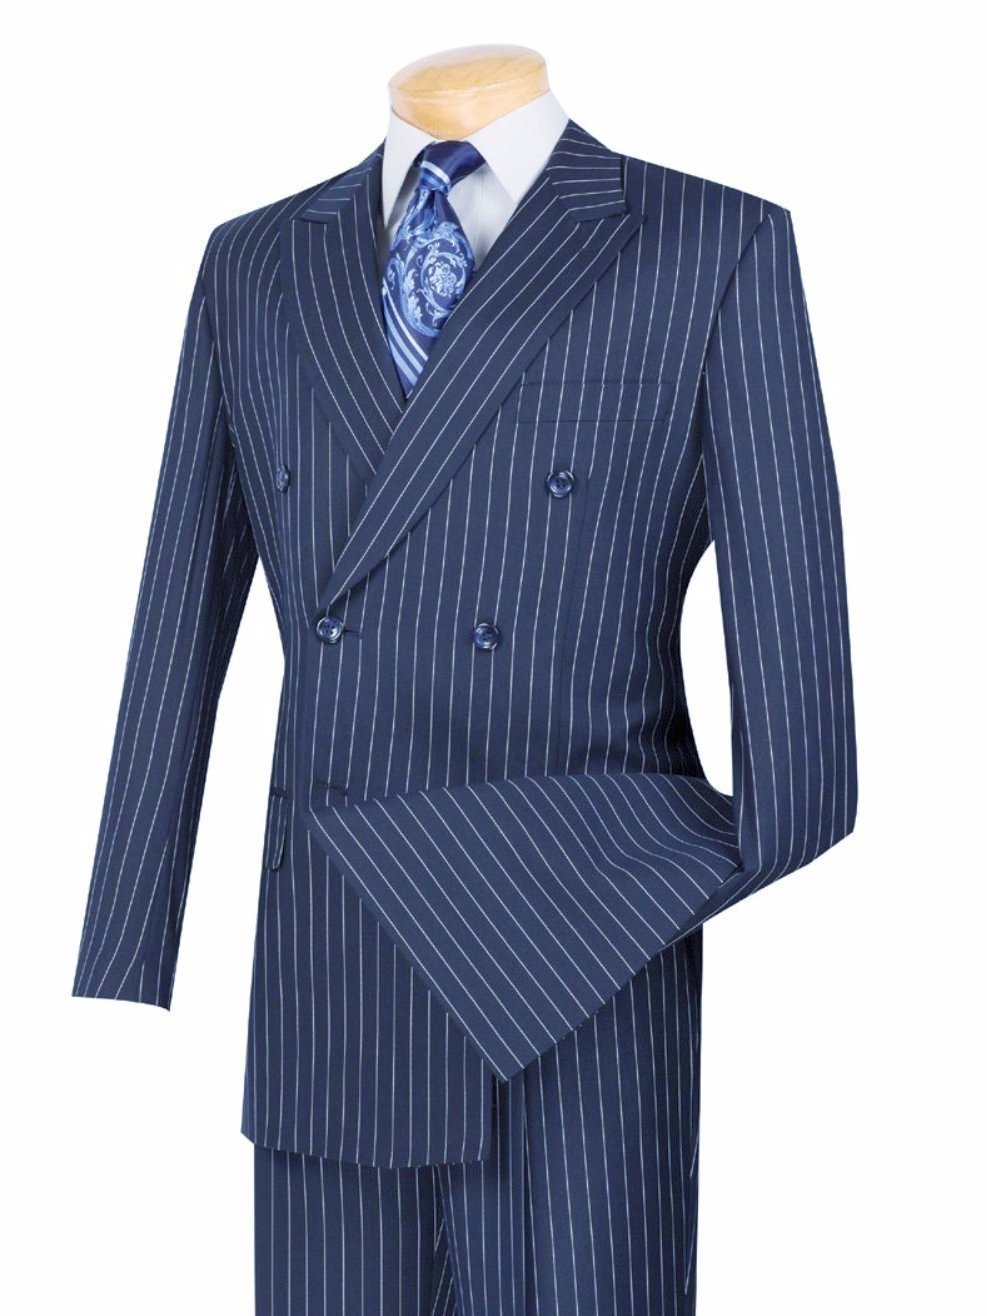 UOMO COLLEZIONI / Blue Pinstripe Suit  Blue pinstripe suit, Pinstripe  suit, Mens fashion suits